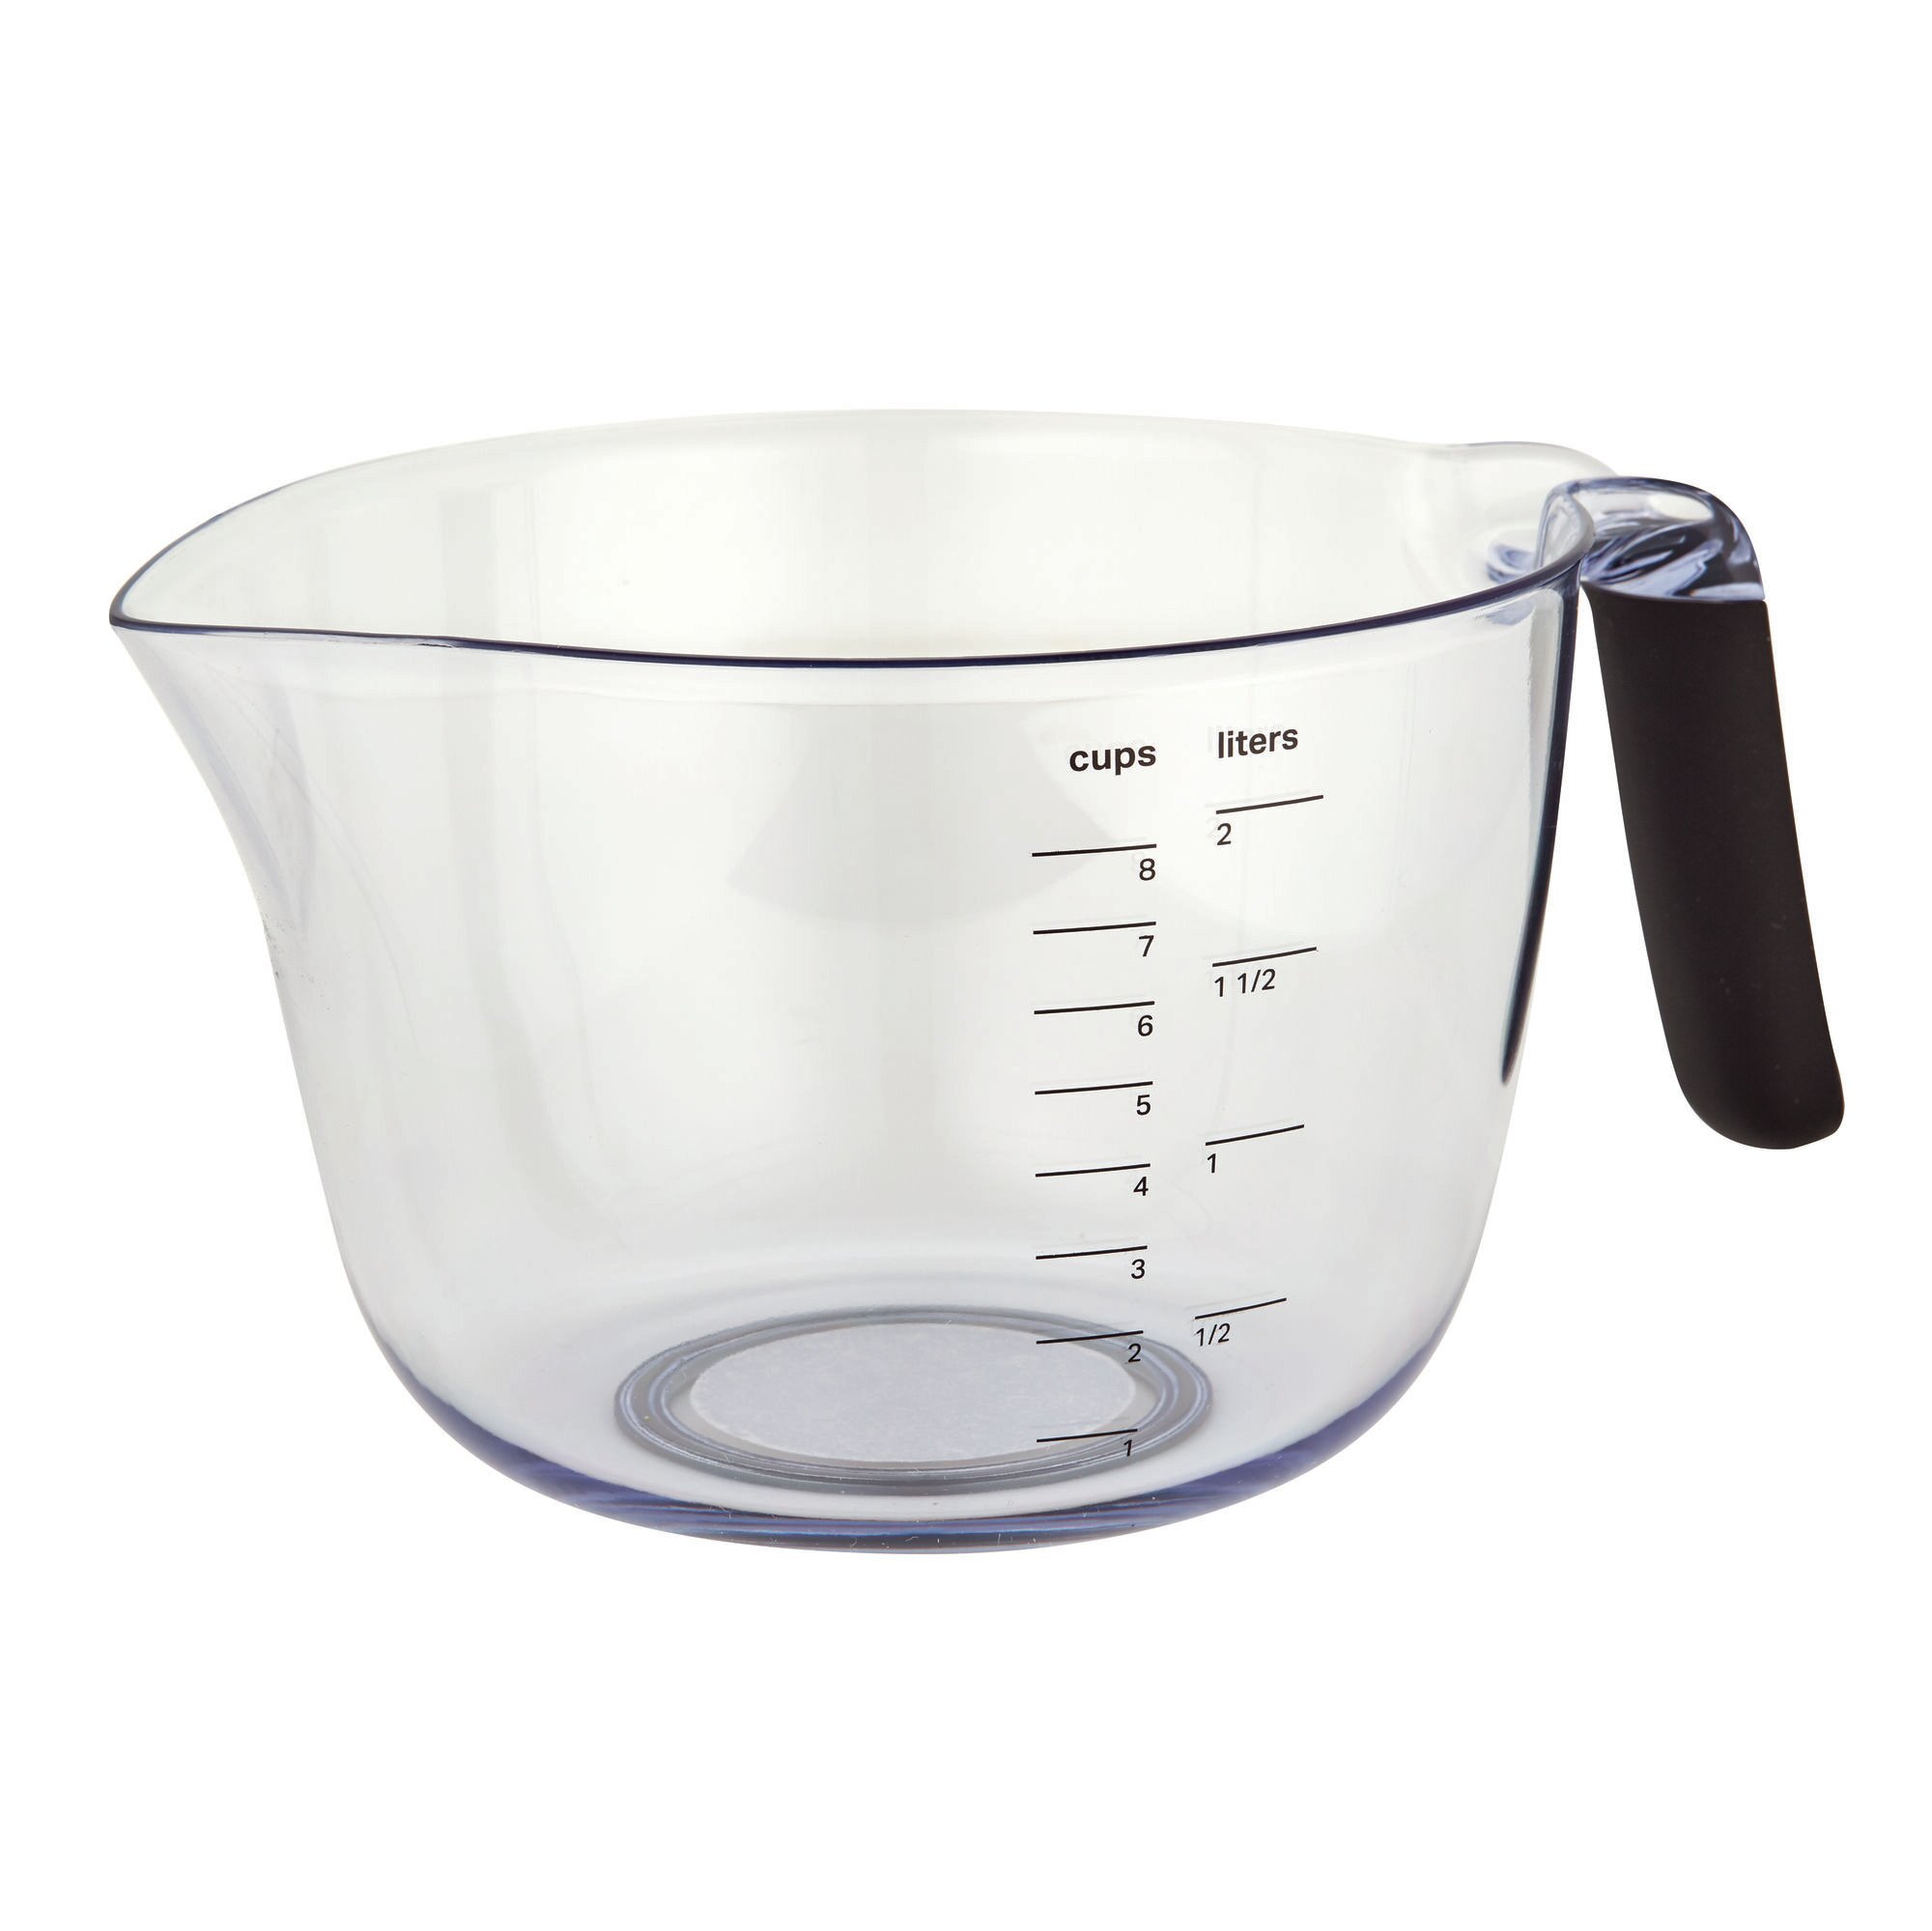 KitchenAid Universal Measuring Cup and Spoon Set, 9 Piece, Aqua